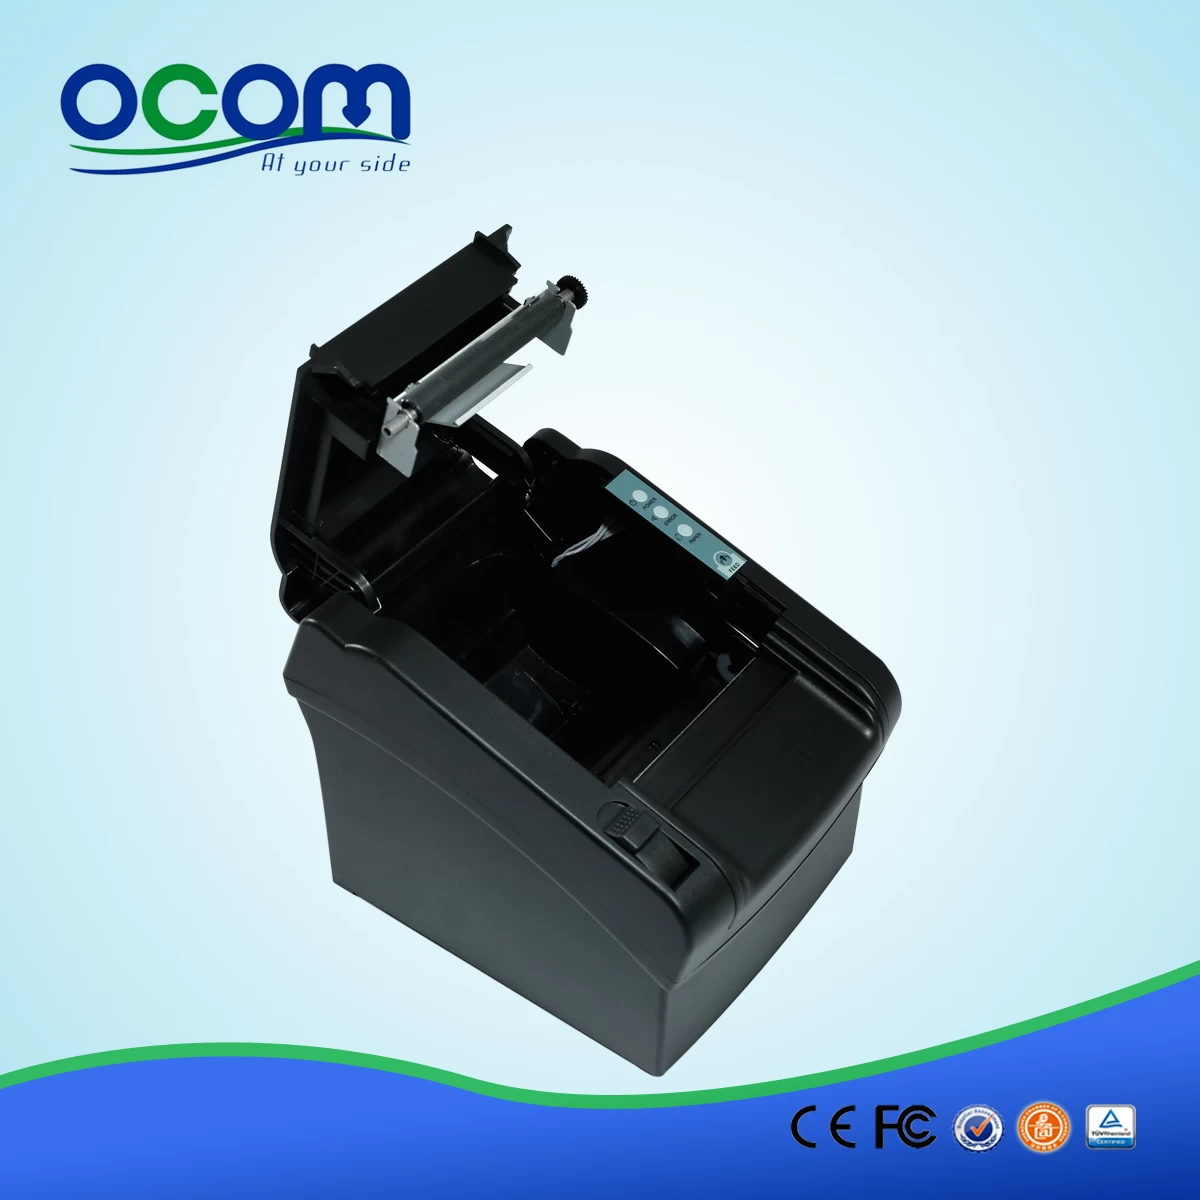 80mm usb thermal receipt printer